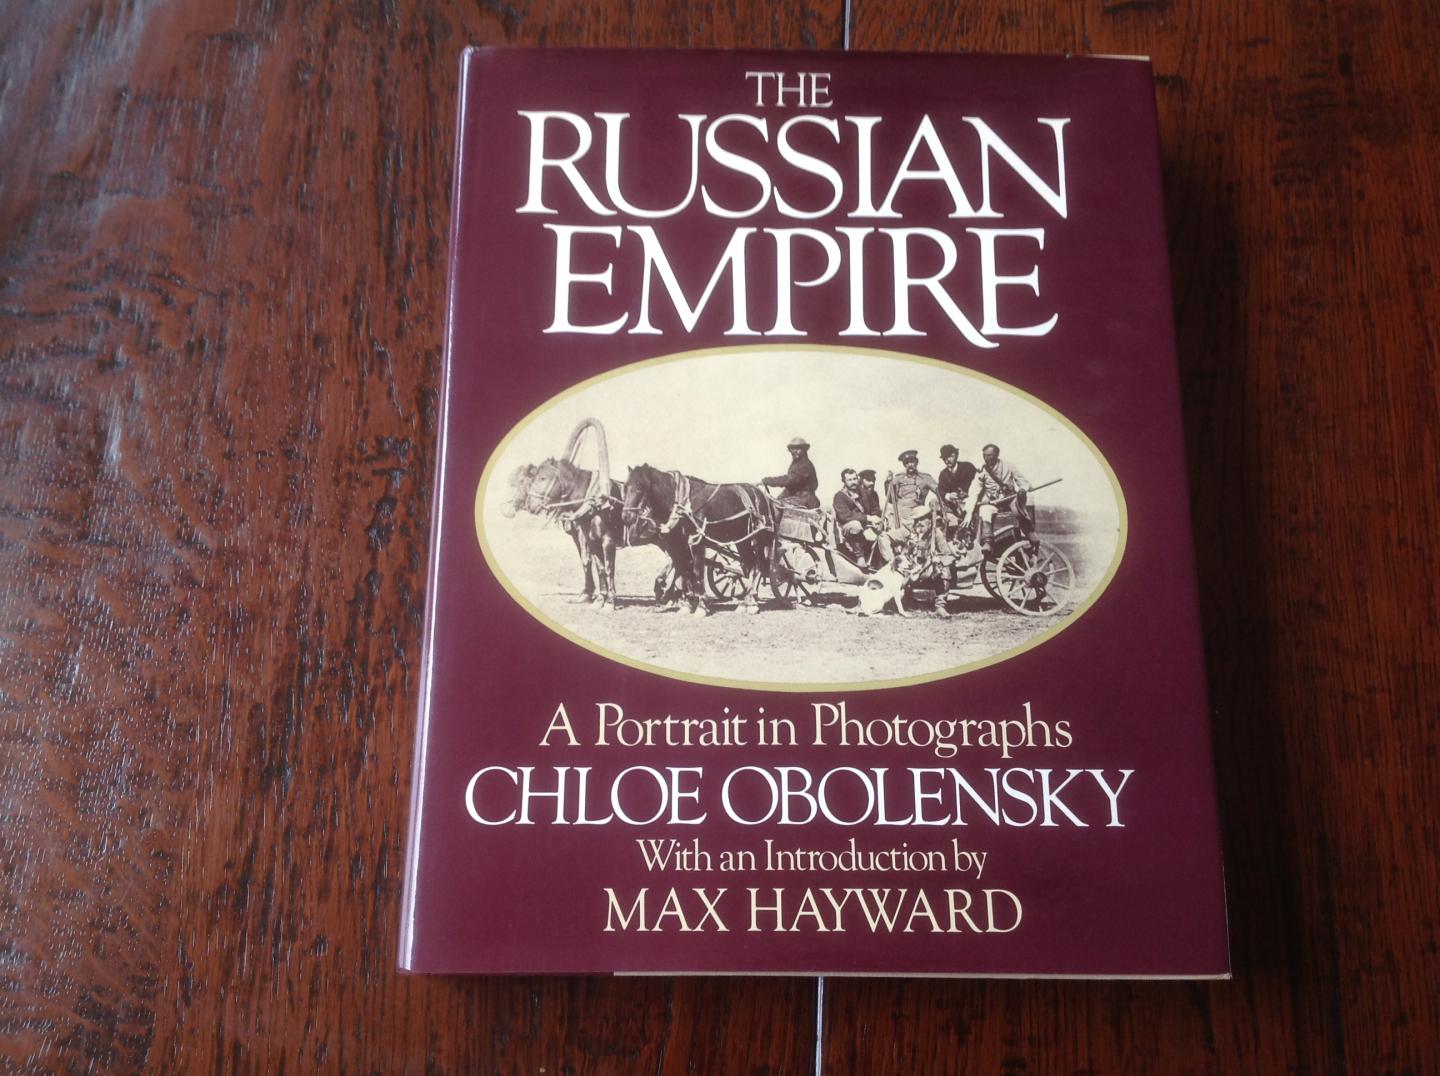 Schrijver:	Obolensky, Chloe & Max Hayward (introduction) - The Russian Empire: A portrait in photographs 1855-1914